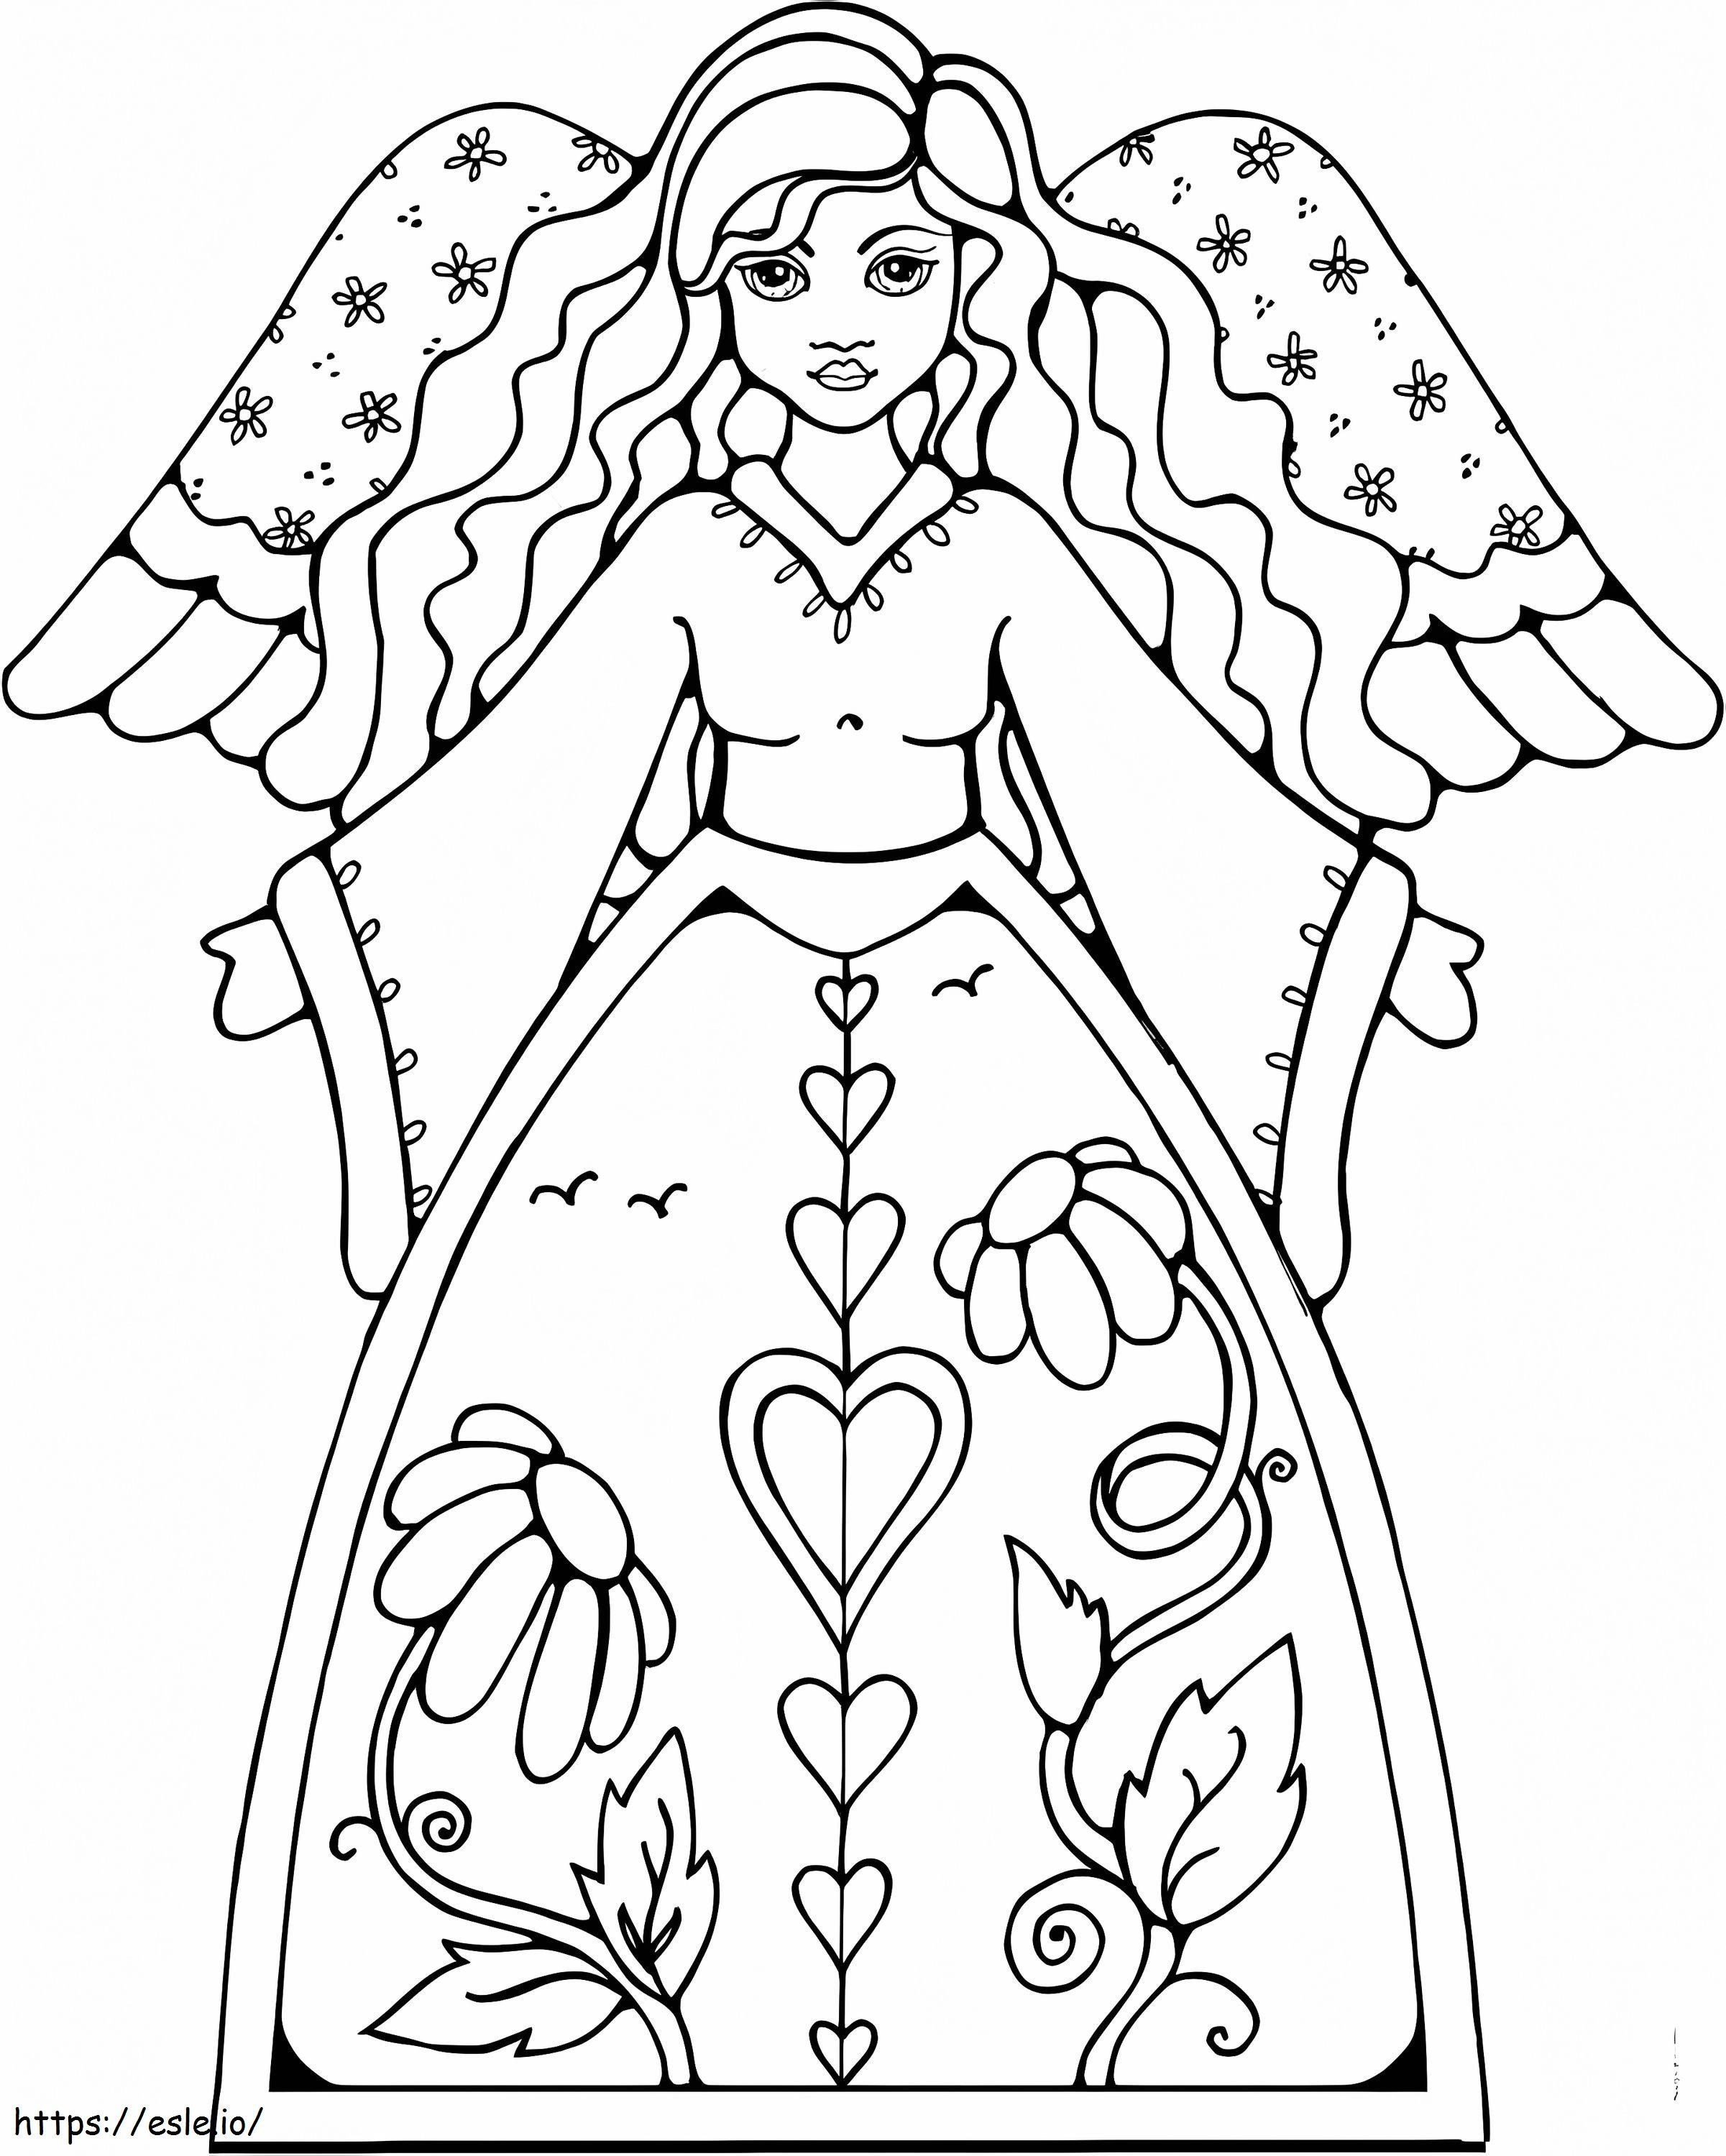 Wonderful Angel coloring page